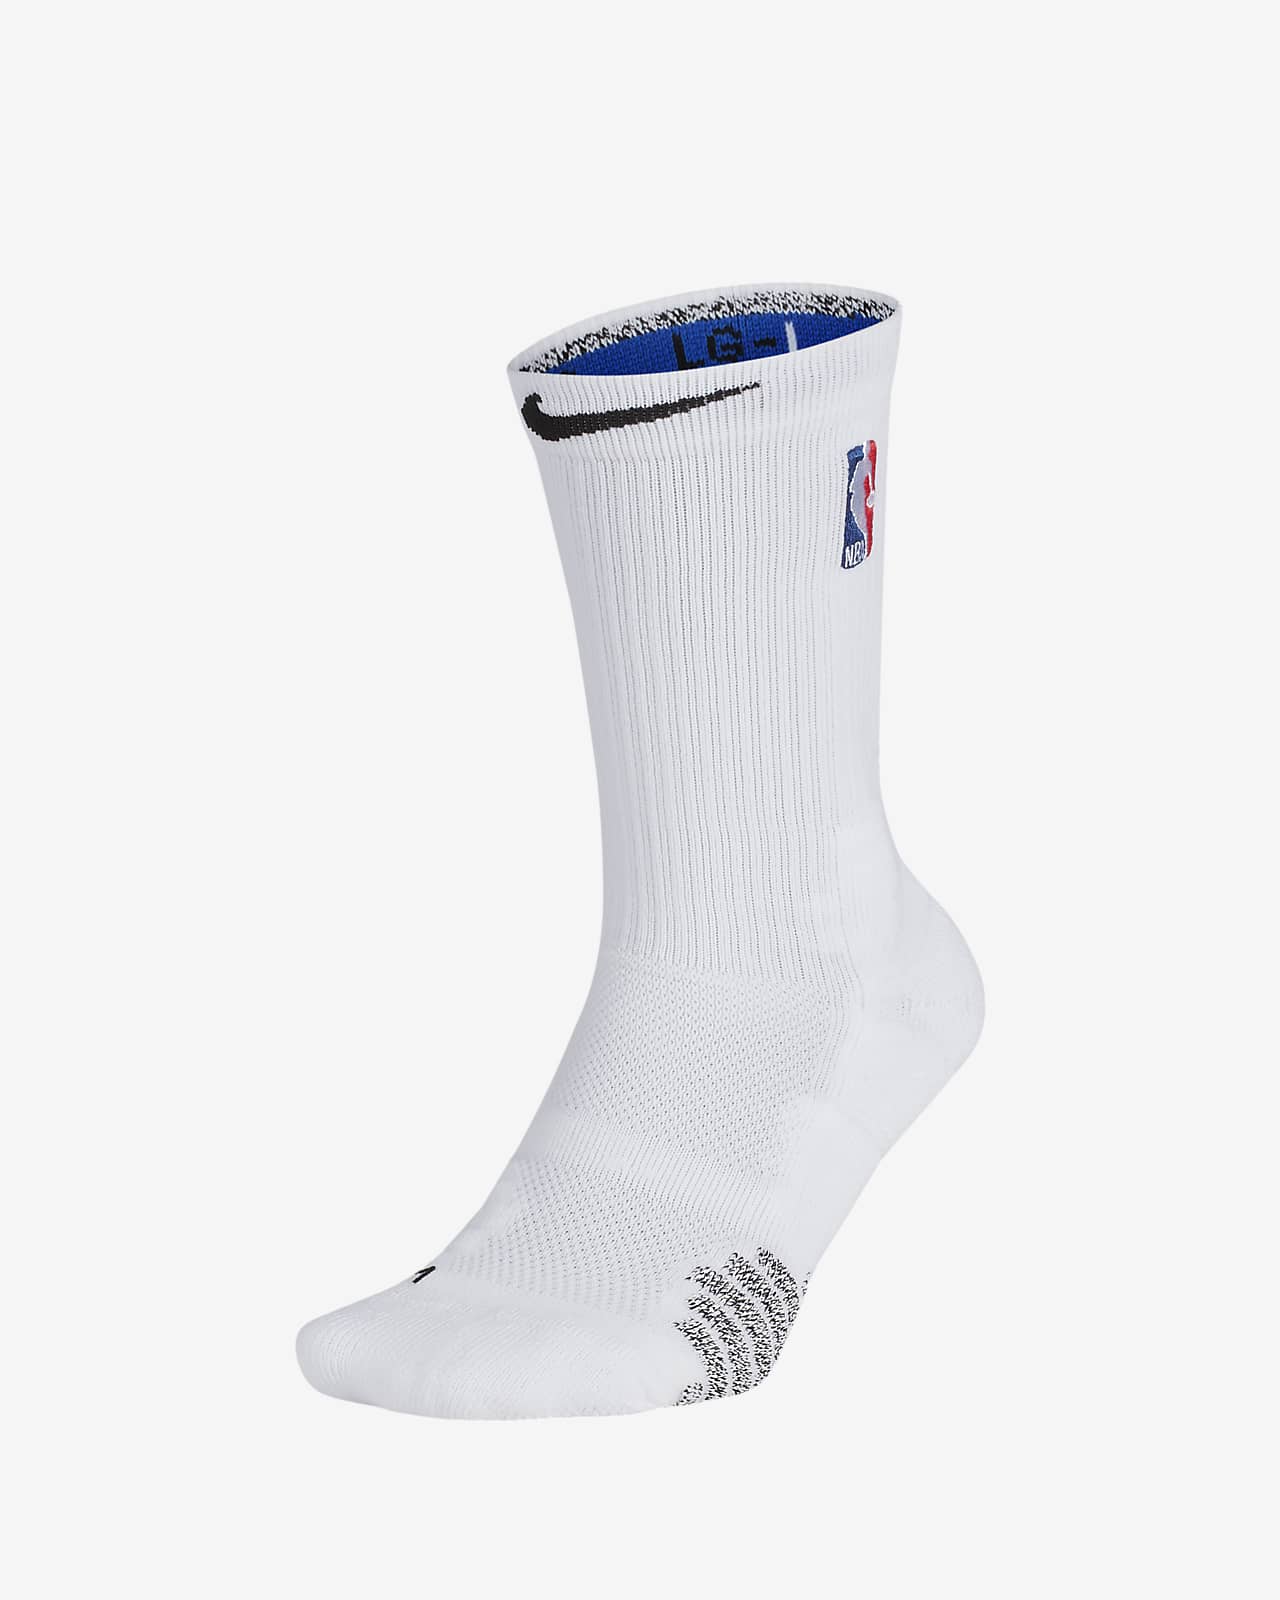 Nike NBA Power Grip Socks  Grip socks, Nike elite socks, Black